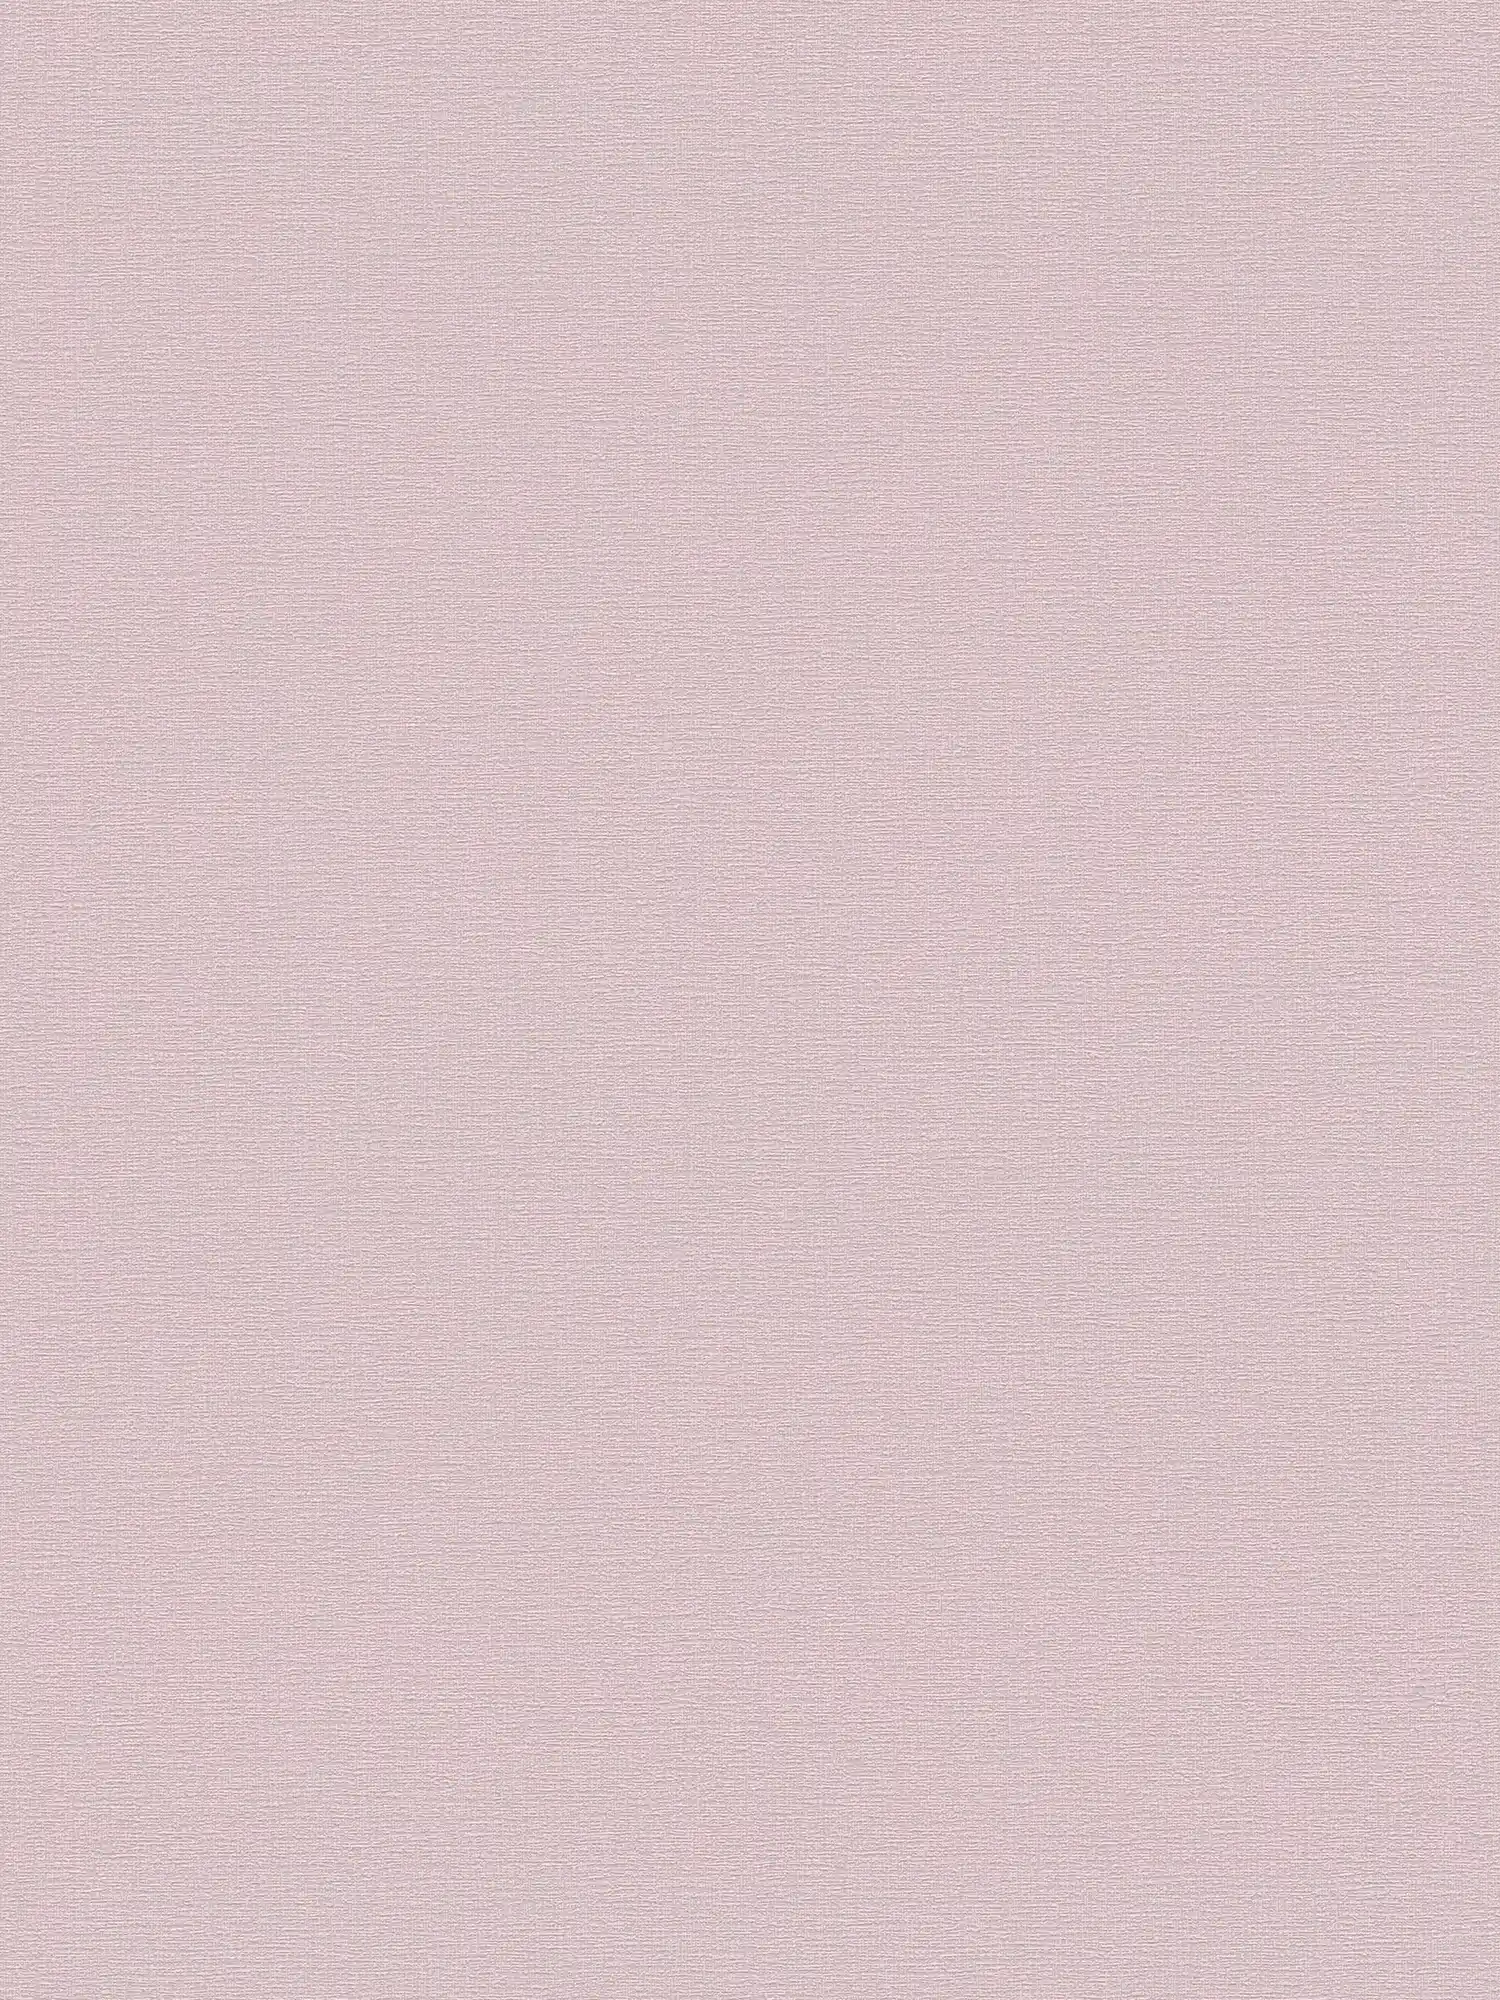 Plain wallpaper with light texture - pink, dusky pink
